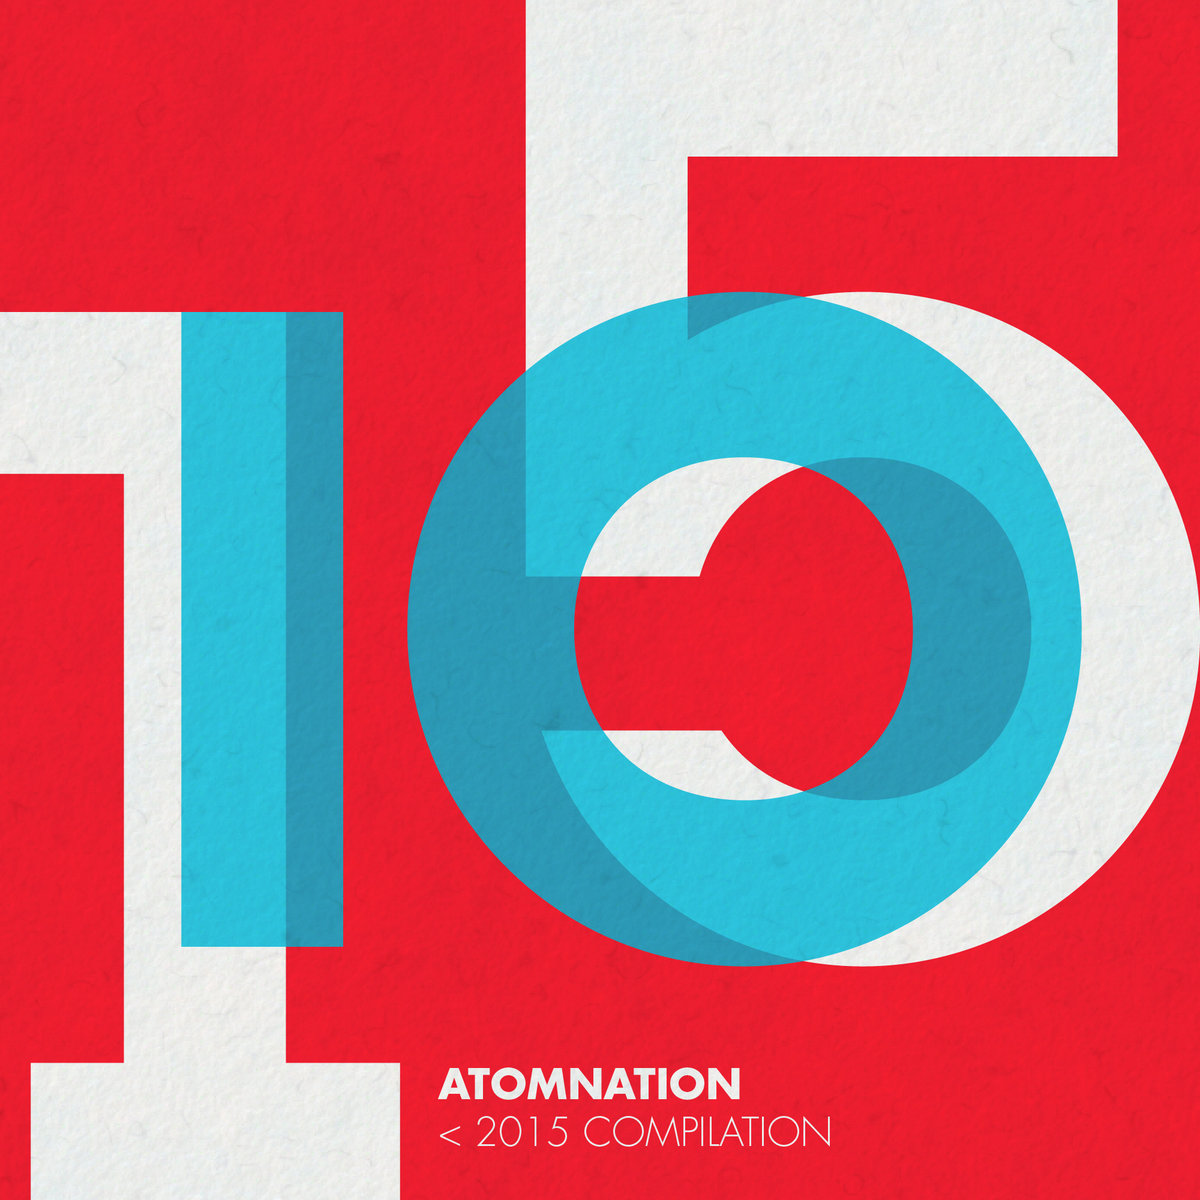 Atomnation < 2015 Compilation